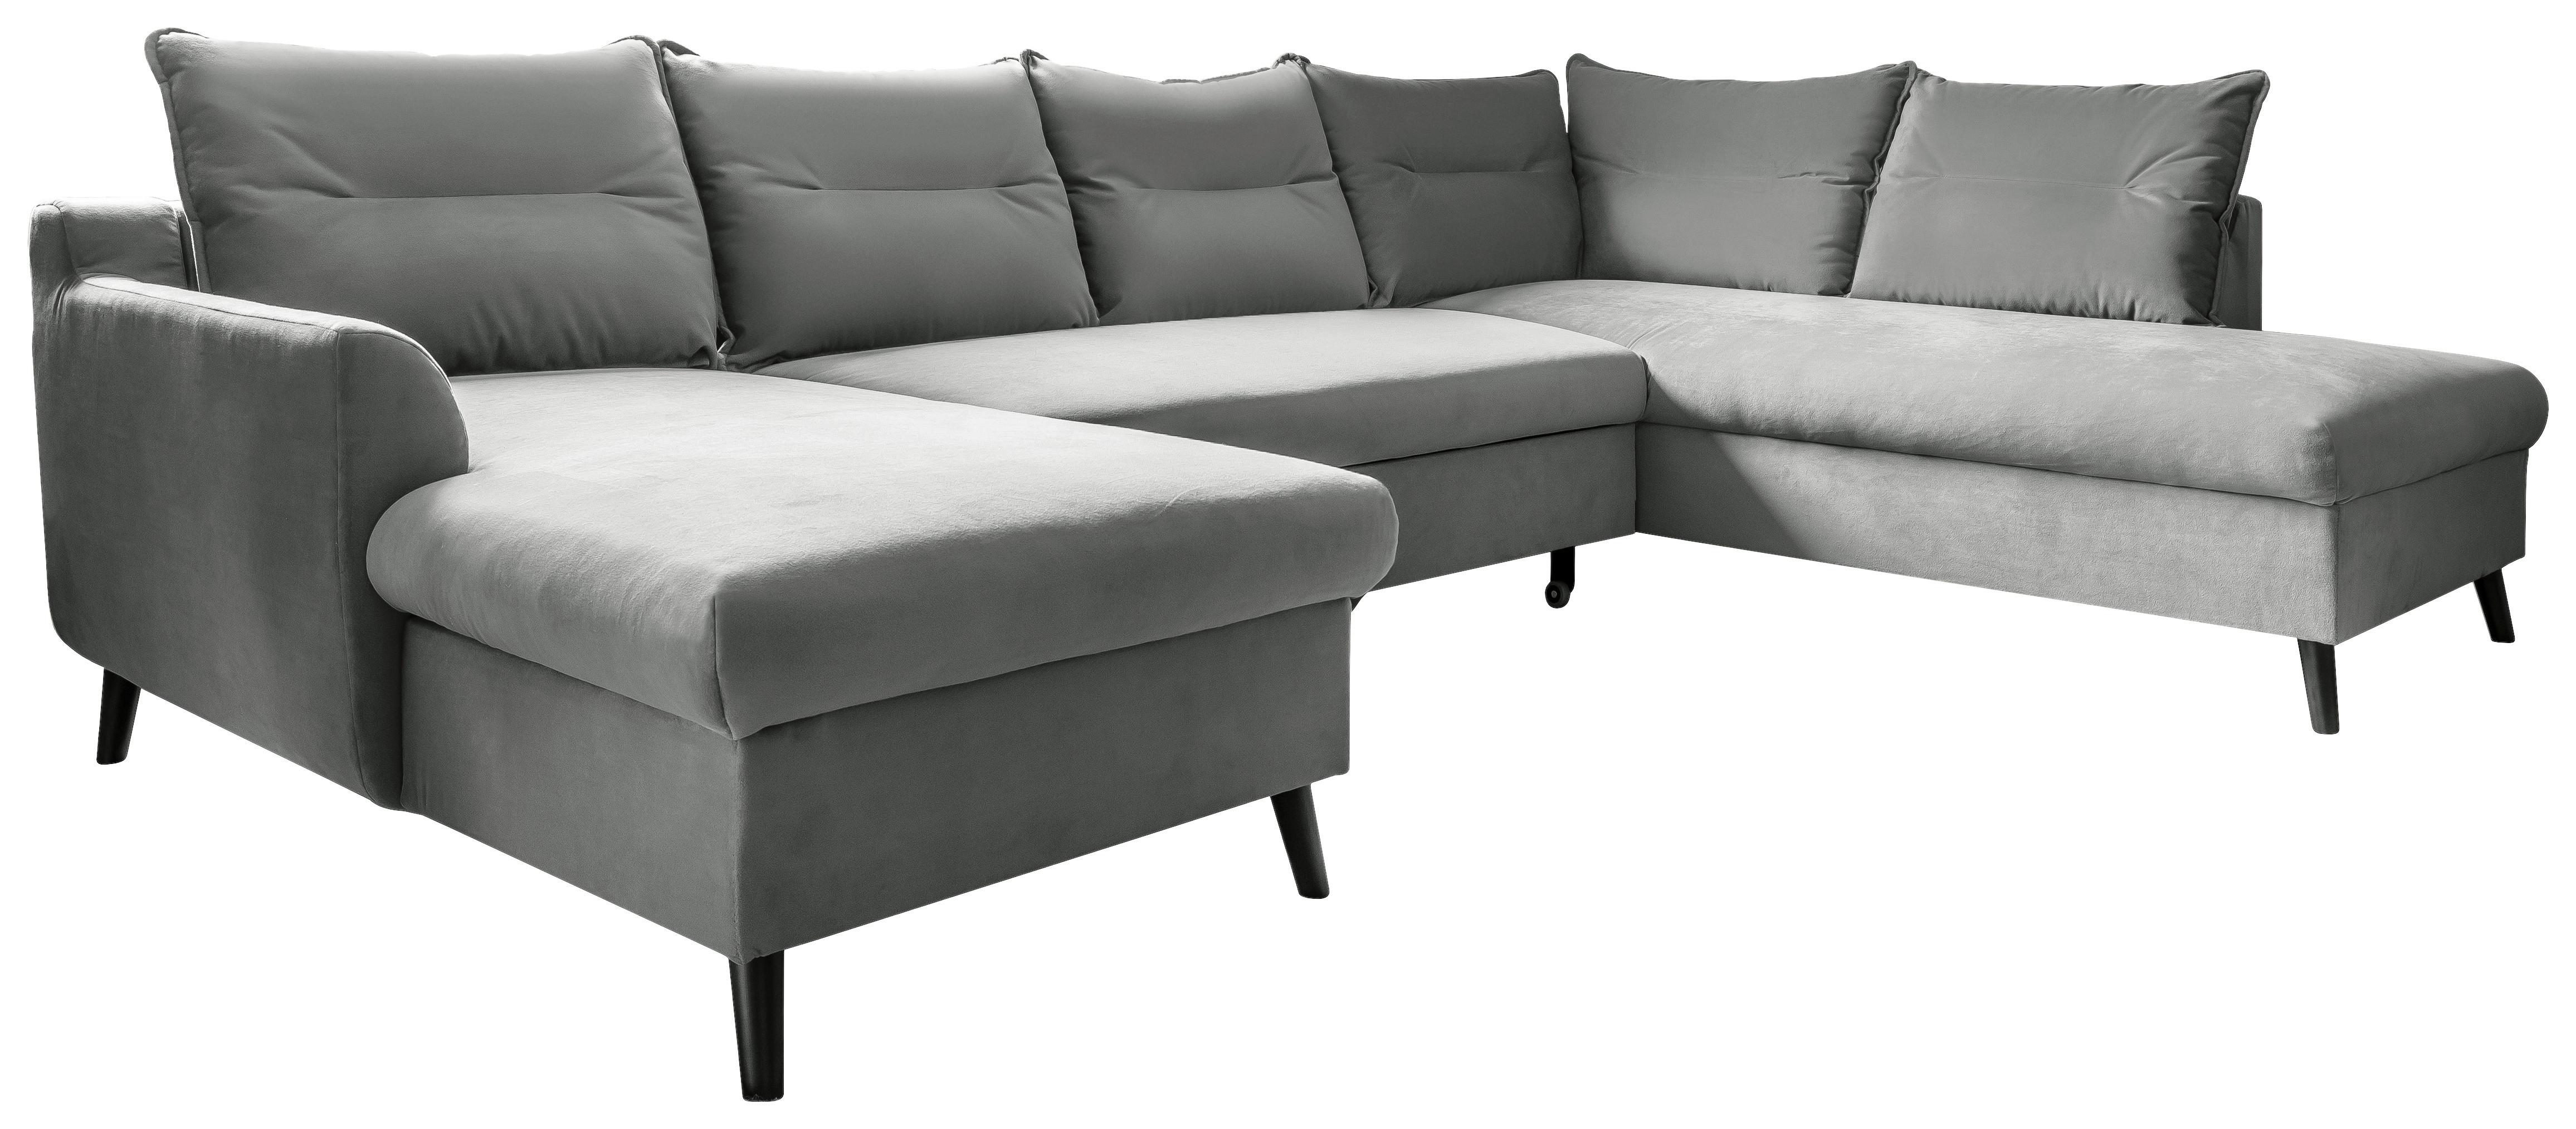 Sedežna Garnitura Stylish Stan, Svetlo Siva - črna/svetlo siva, Basics, tekstil/les (150/300/200cm) - MID.YOU